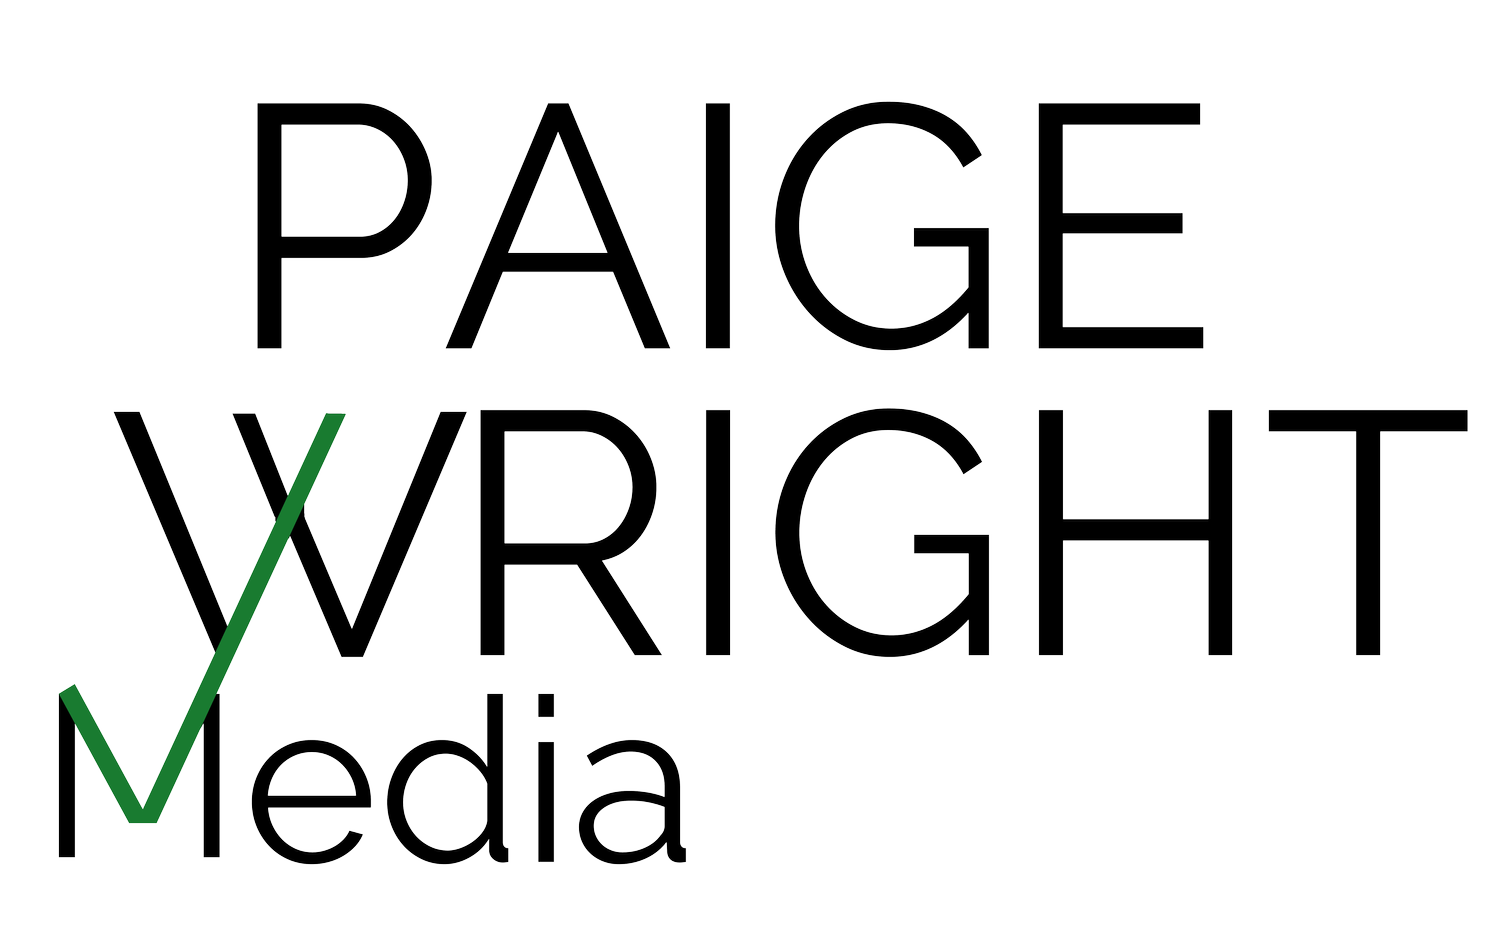 Paige Wright Media